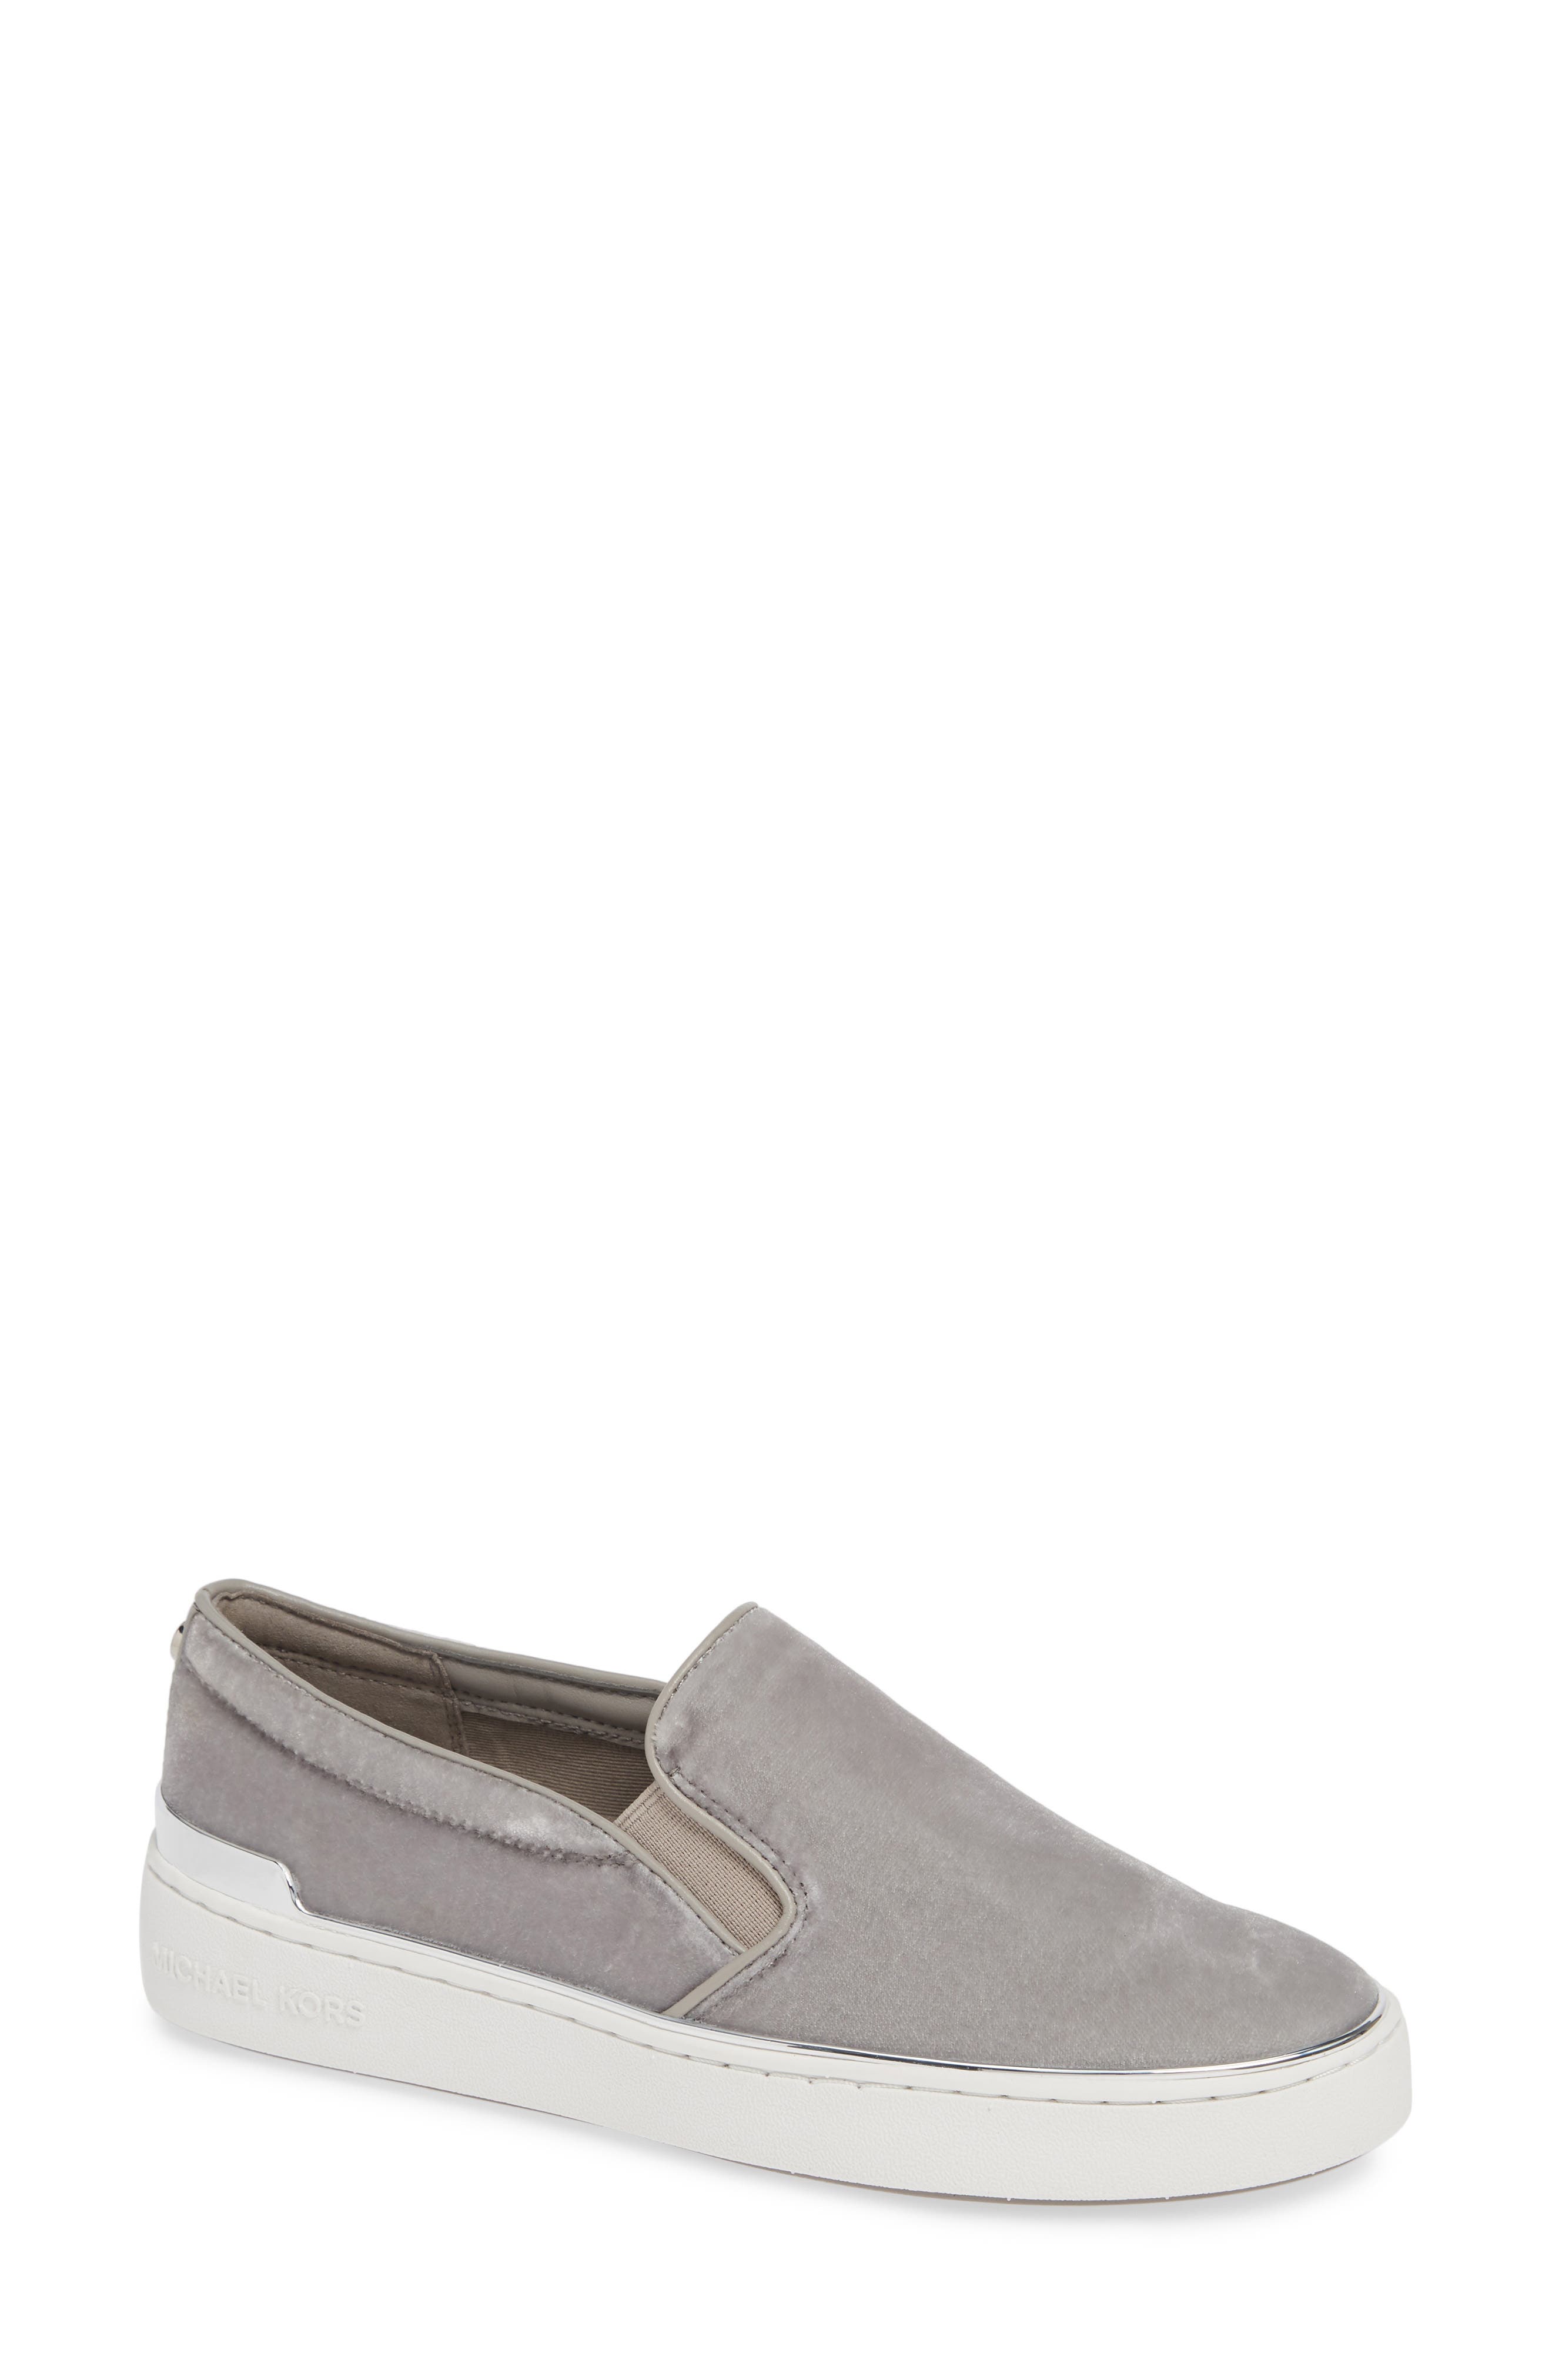 UPC 192837083155 product image for Women's Michael Michael Kors Kyle Slip-On Sneaker, Size 8.5 M - Grey | upcitemdb.com